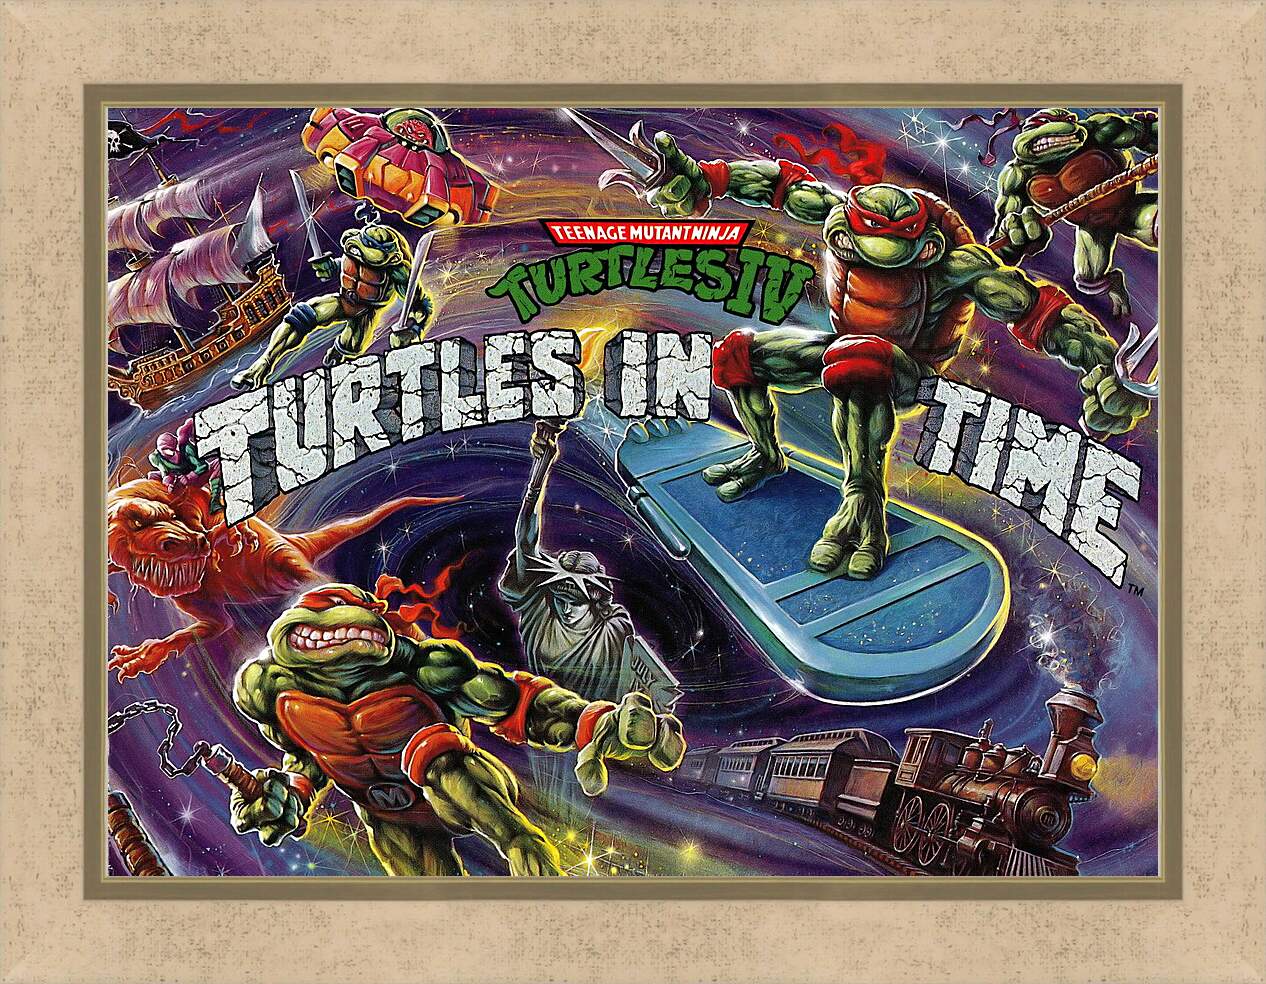 Картина в раме - Teenage Mutant Ninja Turtles Iv: Turtles In Time
